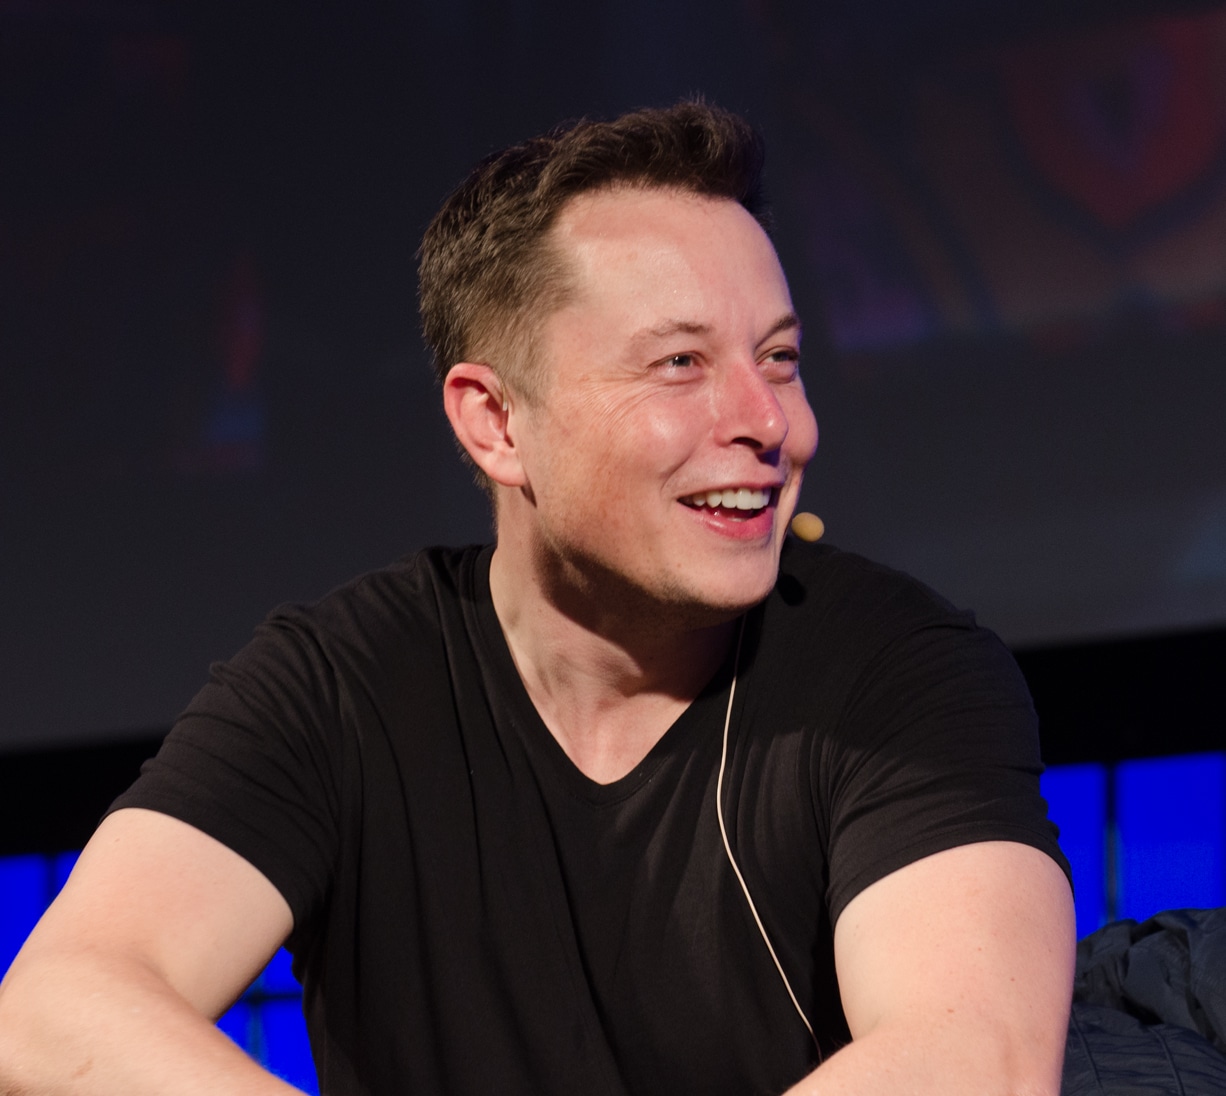 Elon Musk reveals how he wants to improve Twitter
